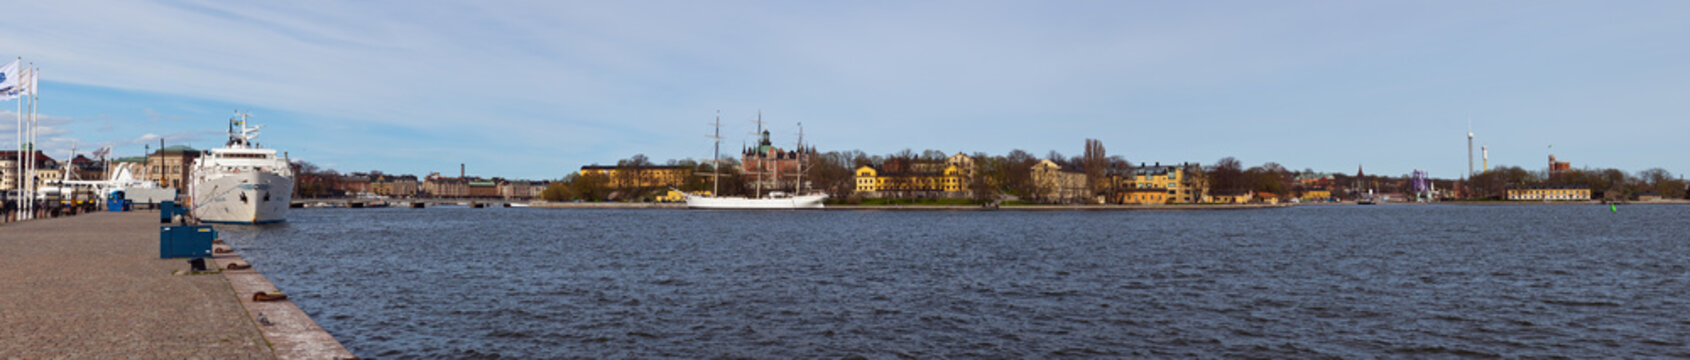 embankment in Stockholm